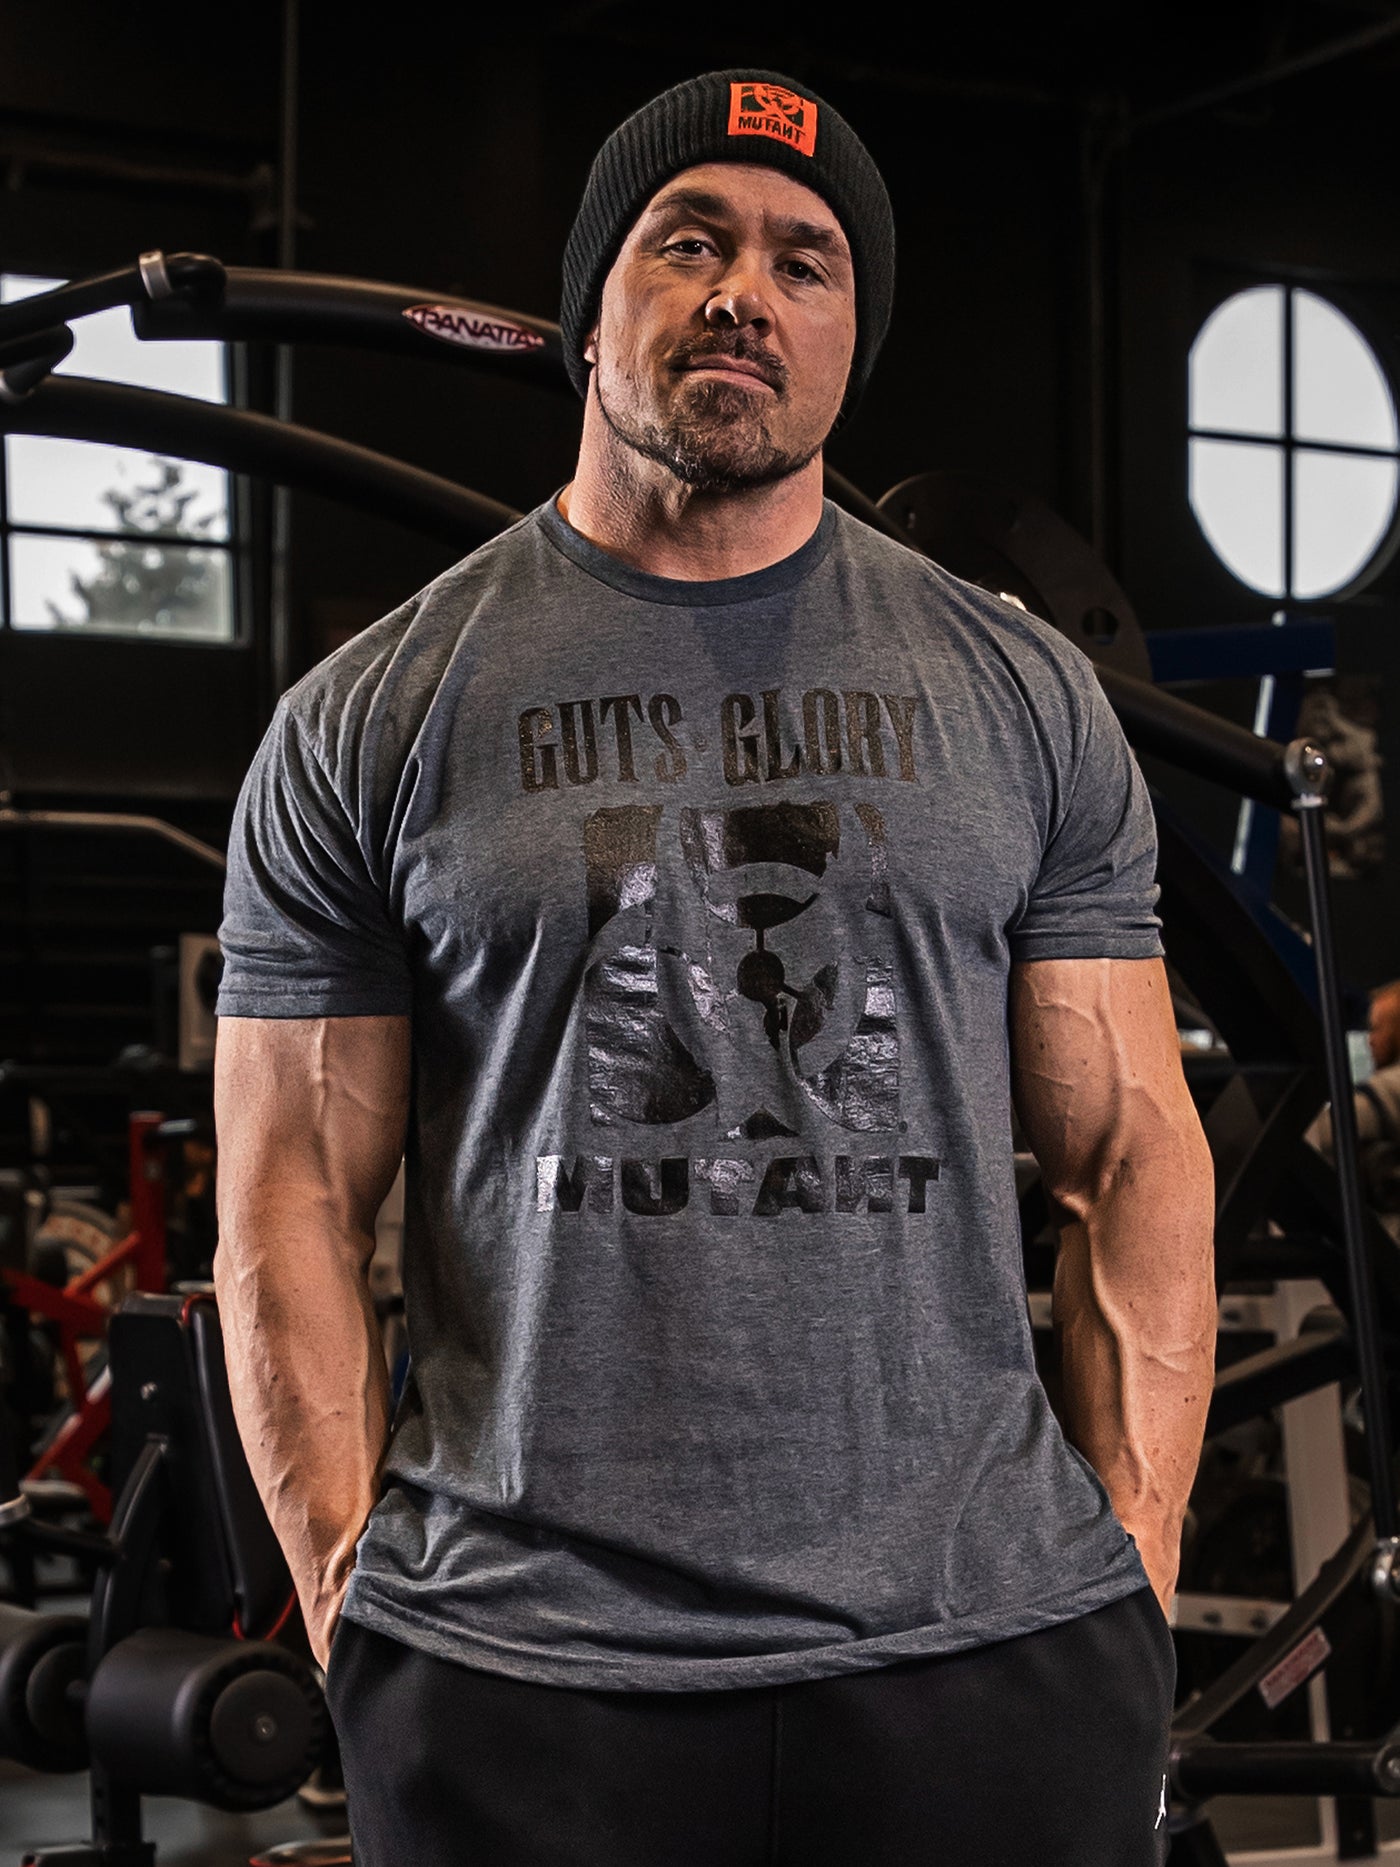 GUTS, GLORY, MUTANT® Gym T-shirt (Charcoal)